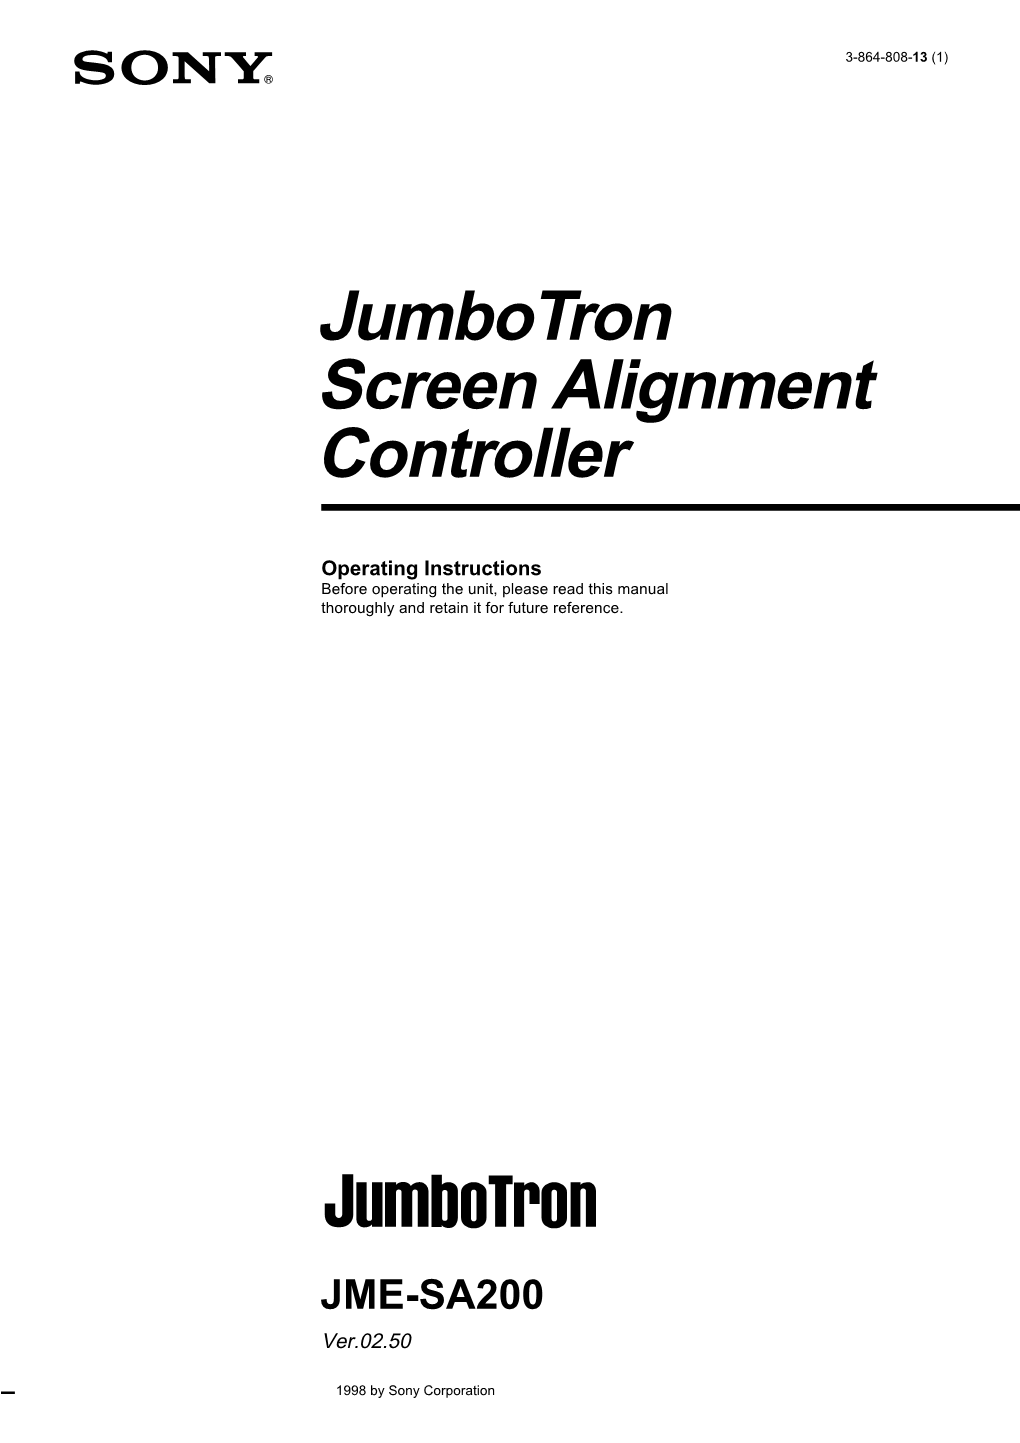 Jumbotron Screen Alignment Controller